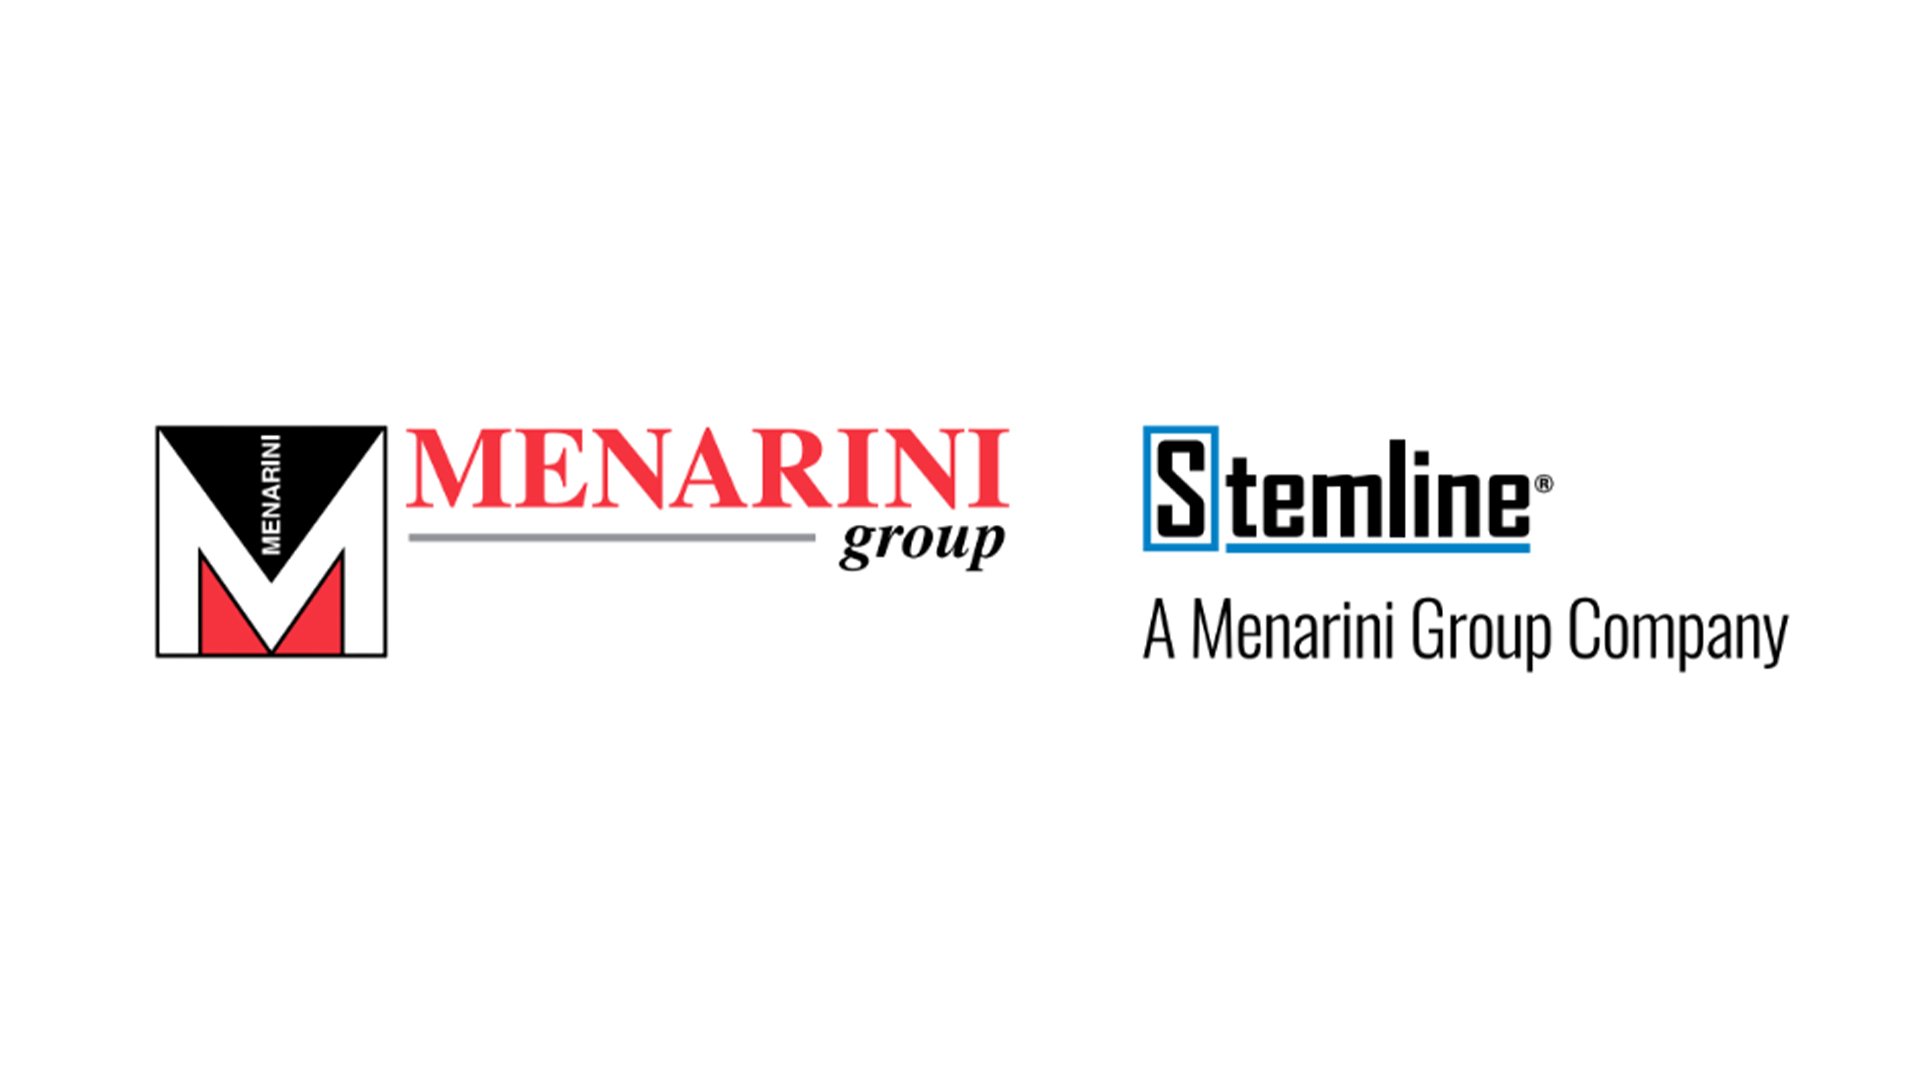 Stemline, Menarini Group